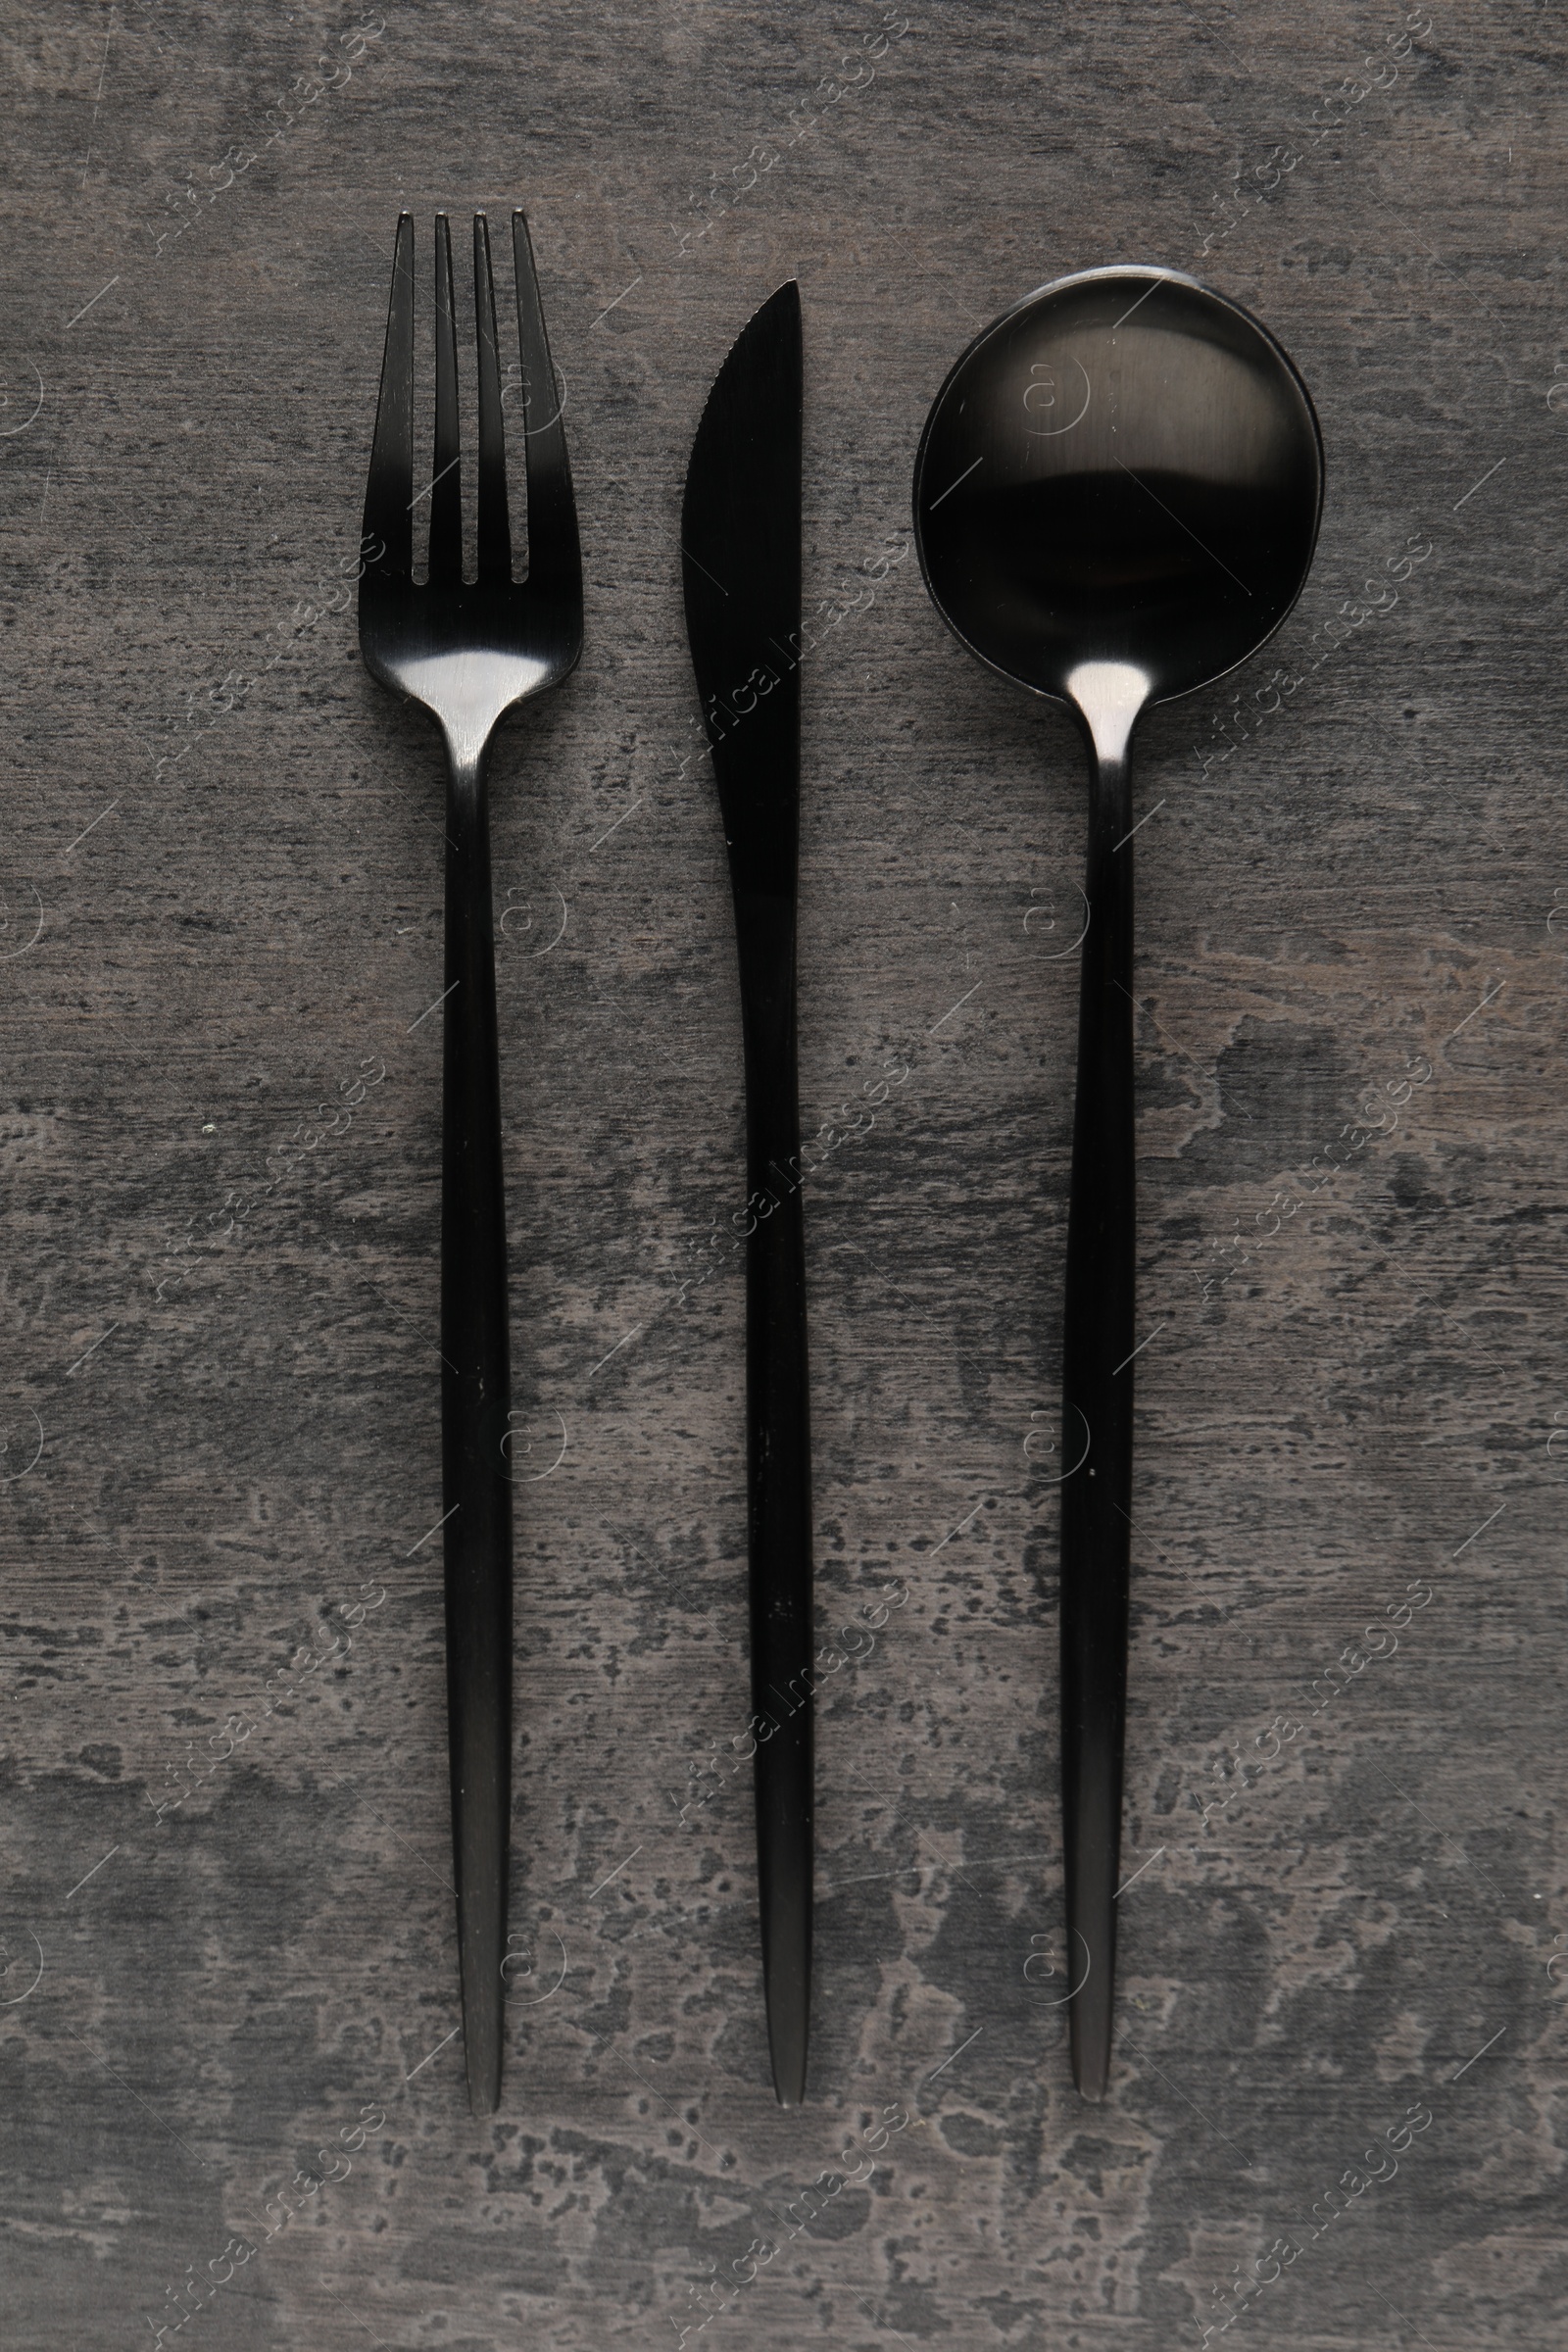 Photo of Stylish cutlery on grey table, flat lay